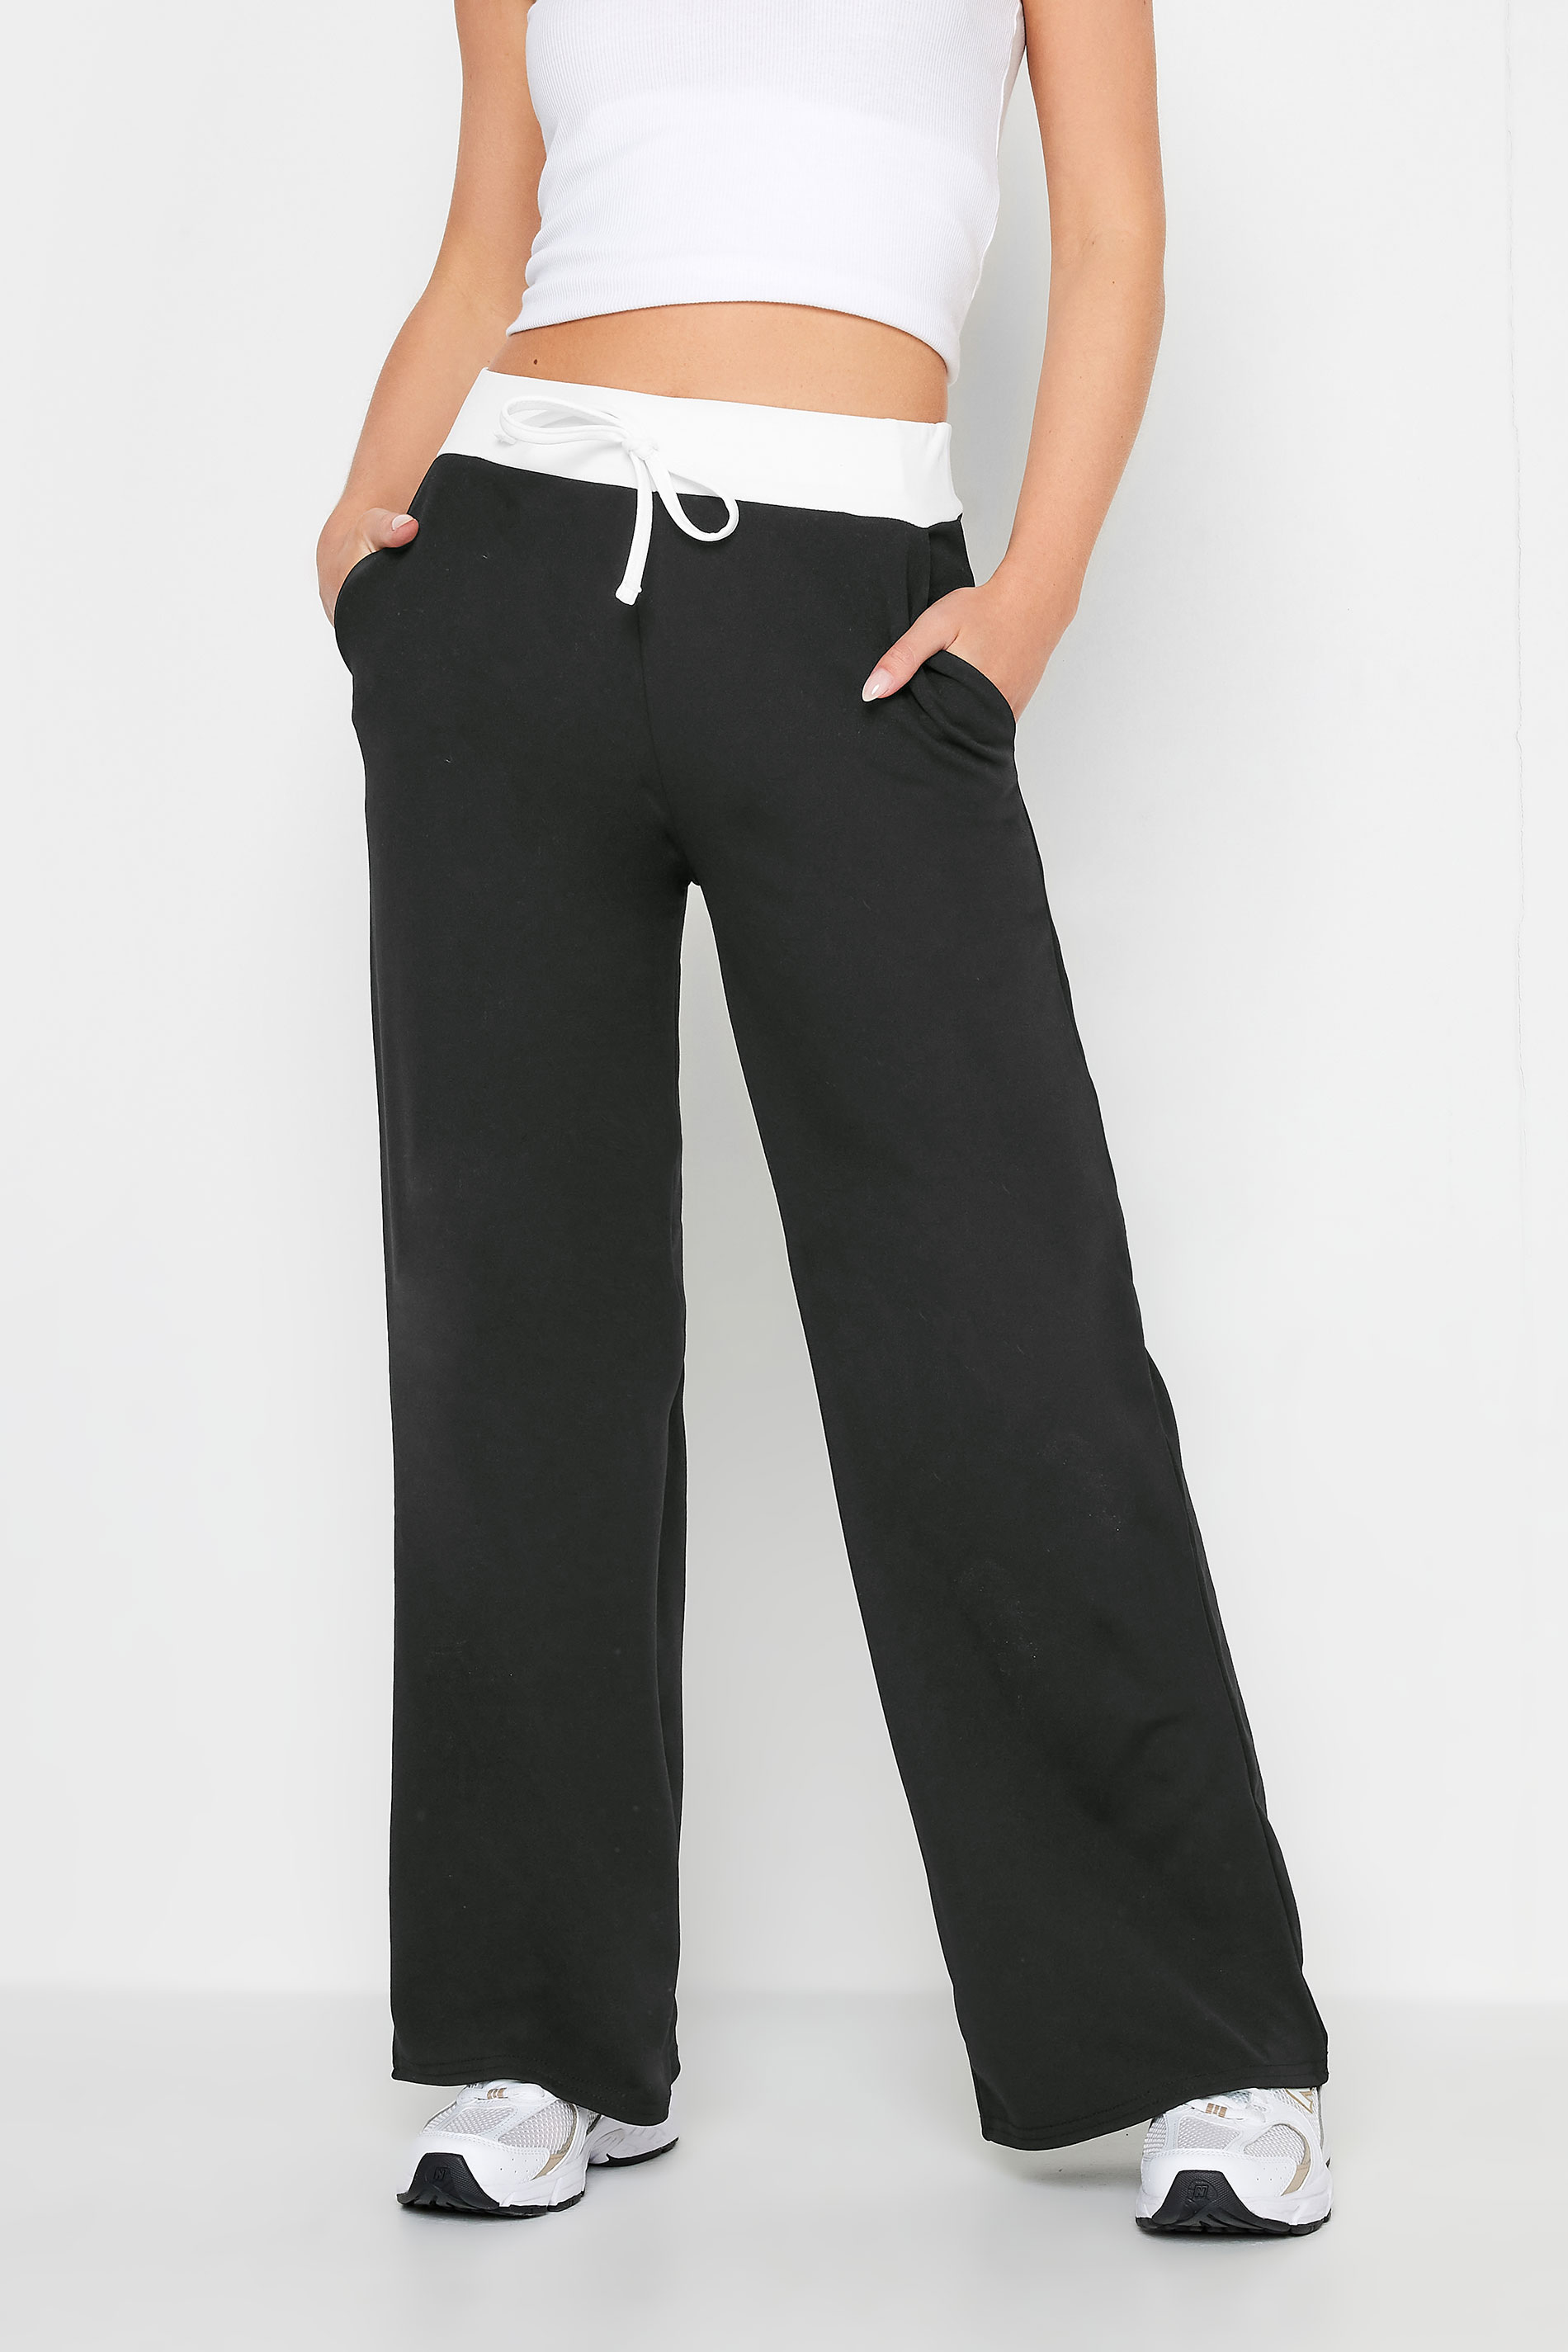 PixieGirl Petite Womens Black & White Contrast Trousers | PixieGirl  3